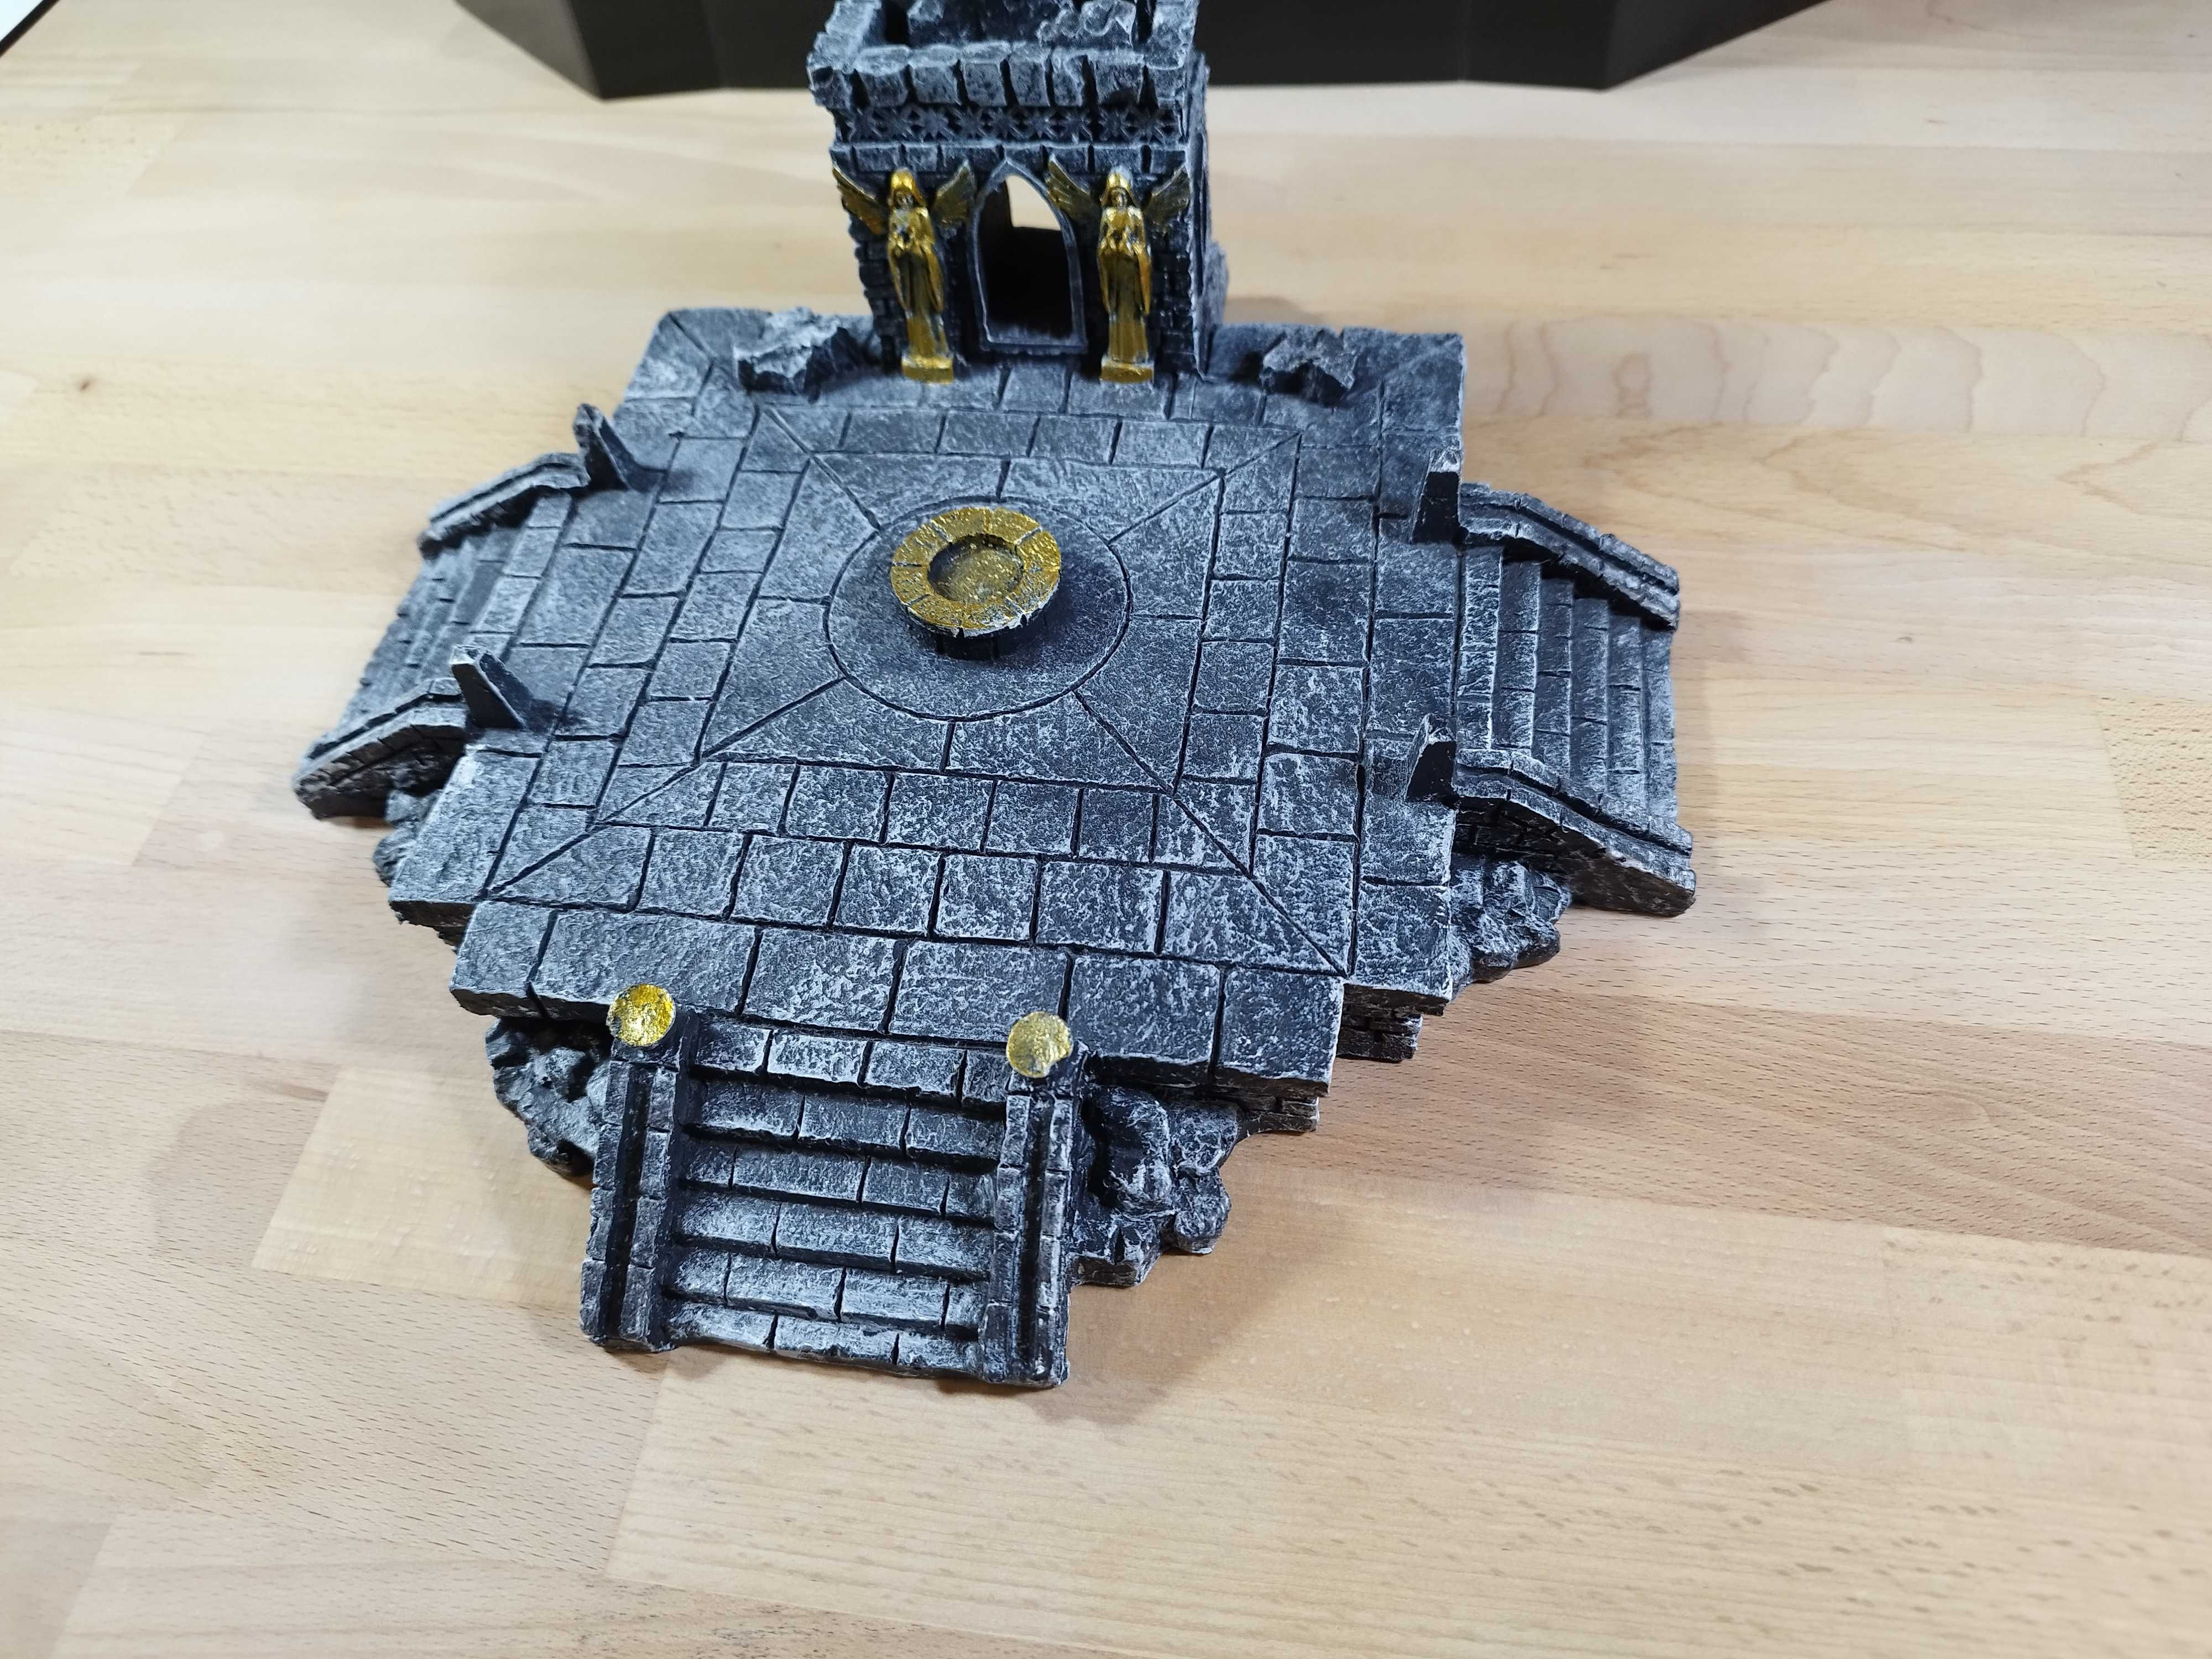 Warhammer Gothic Temple Teren Gamemat